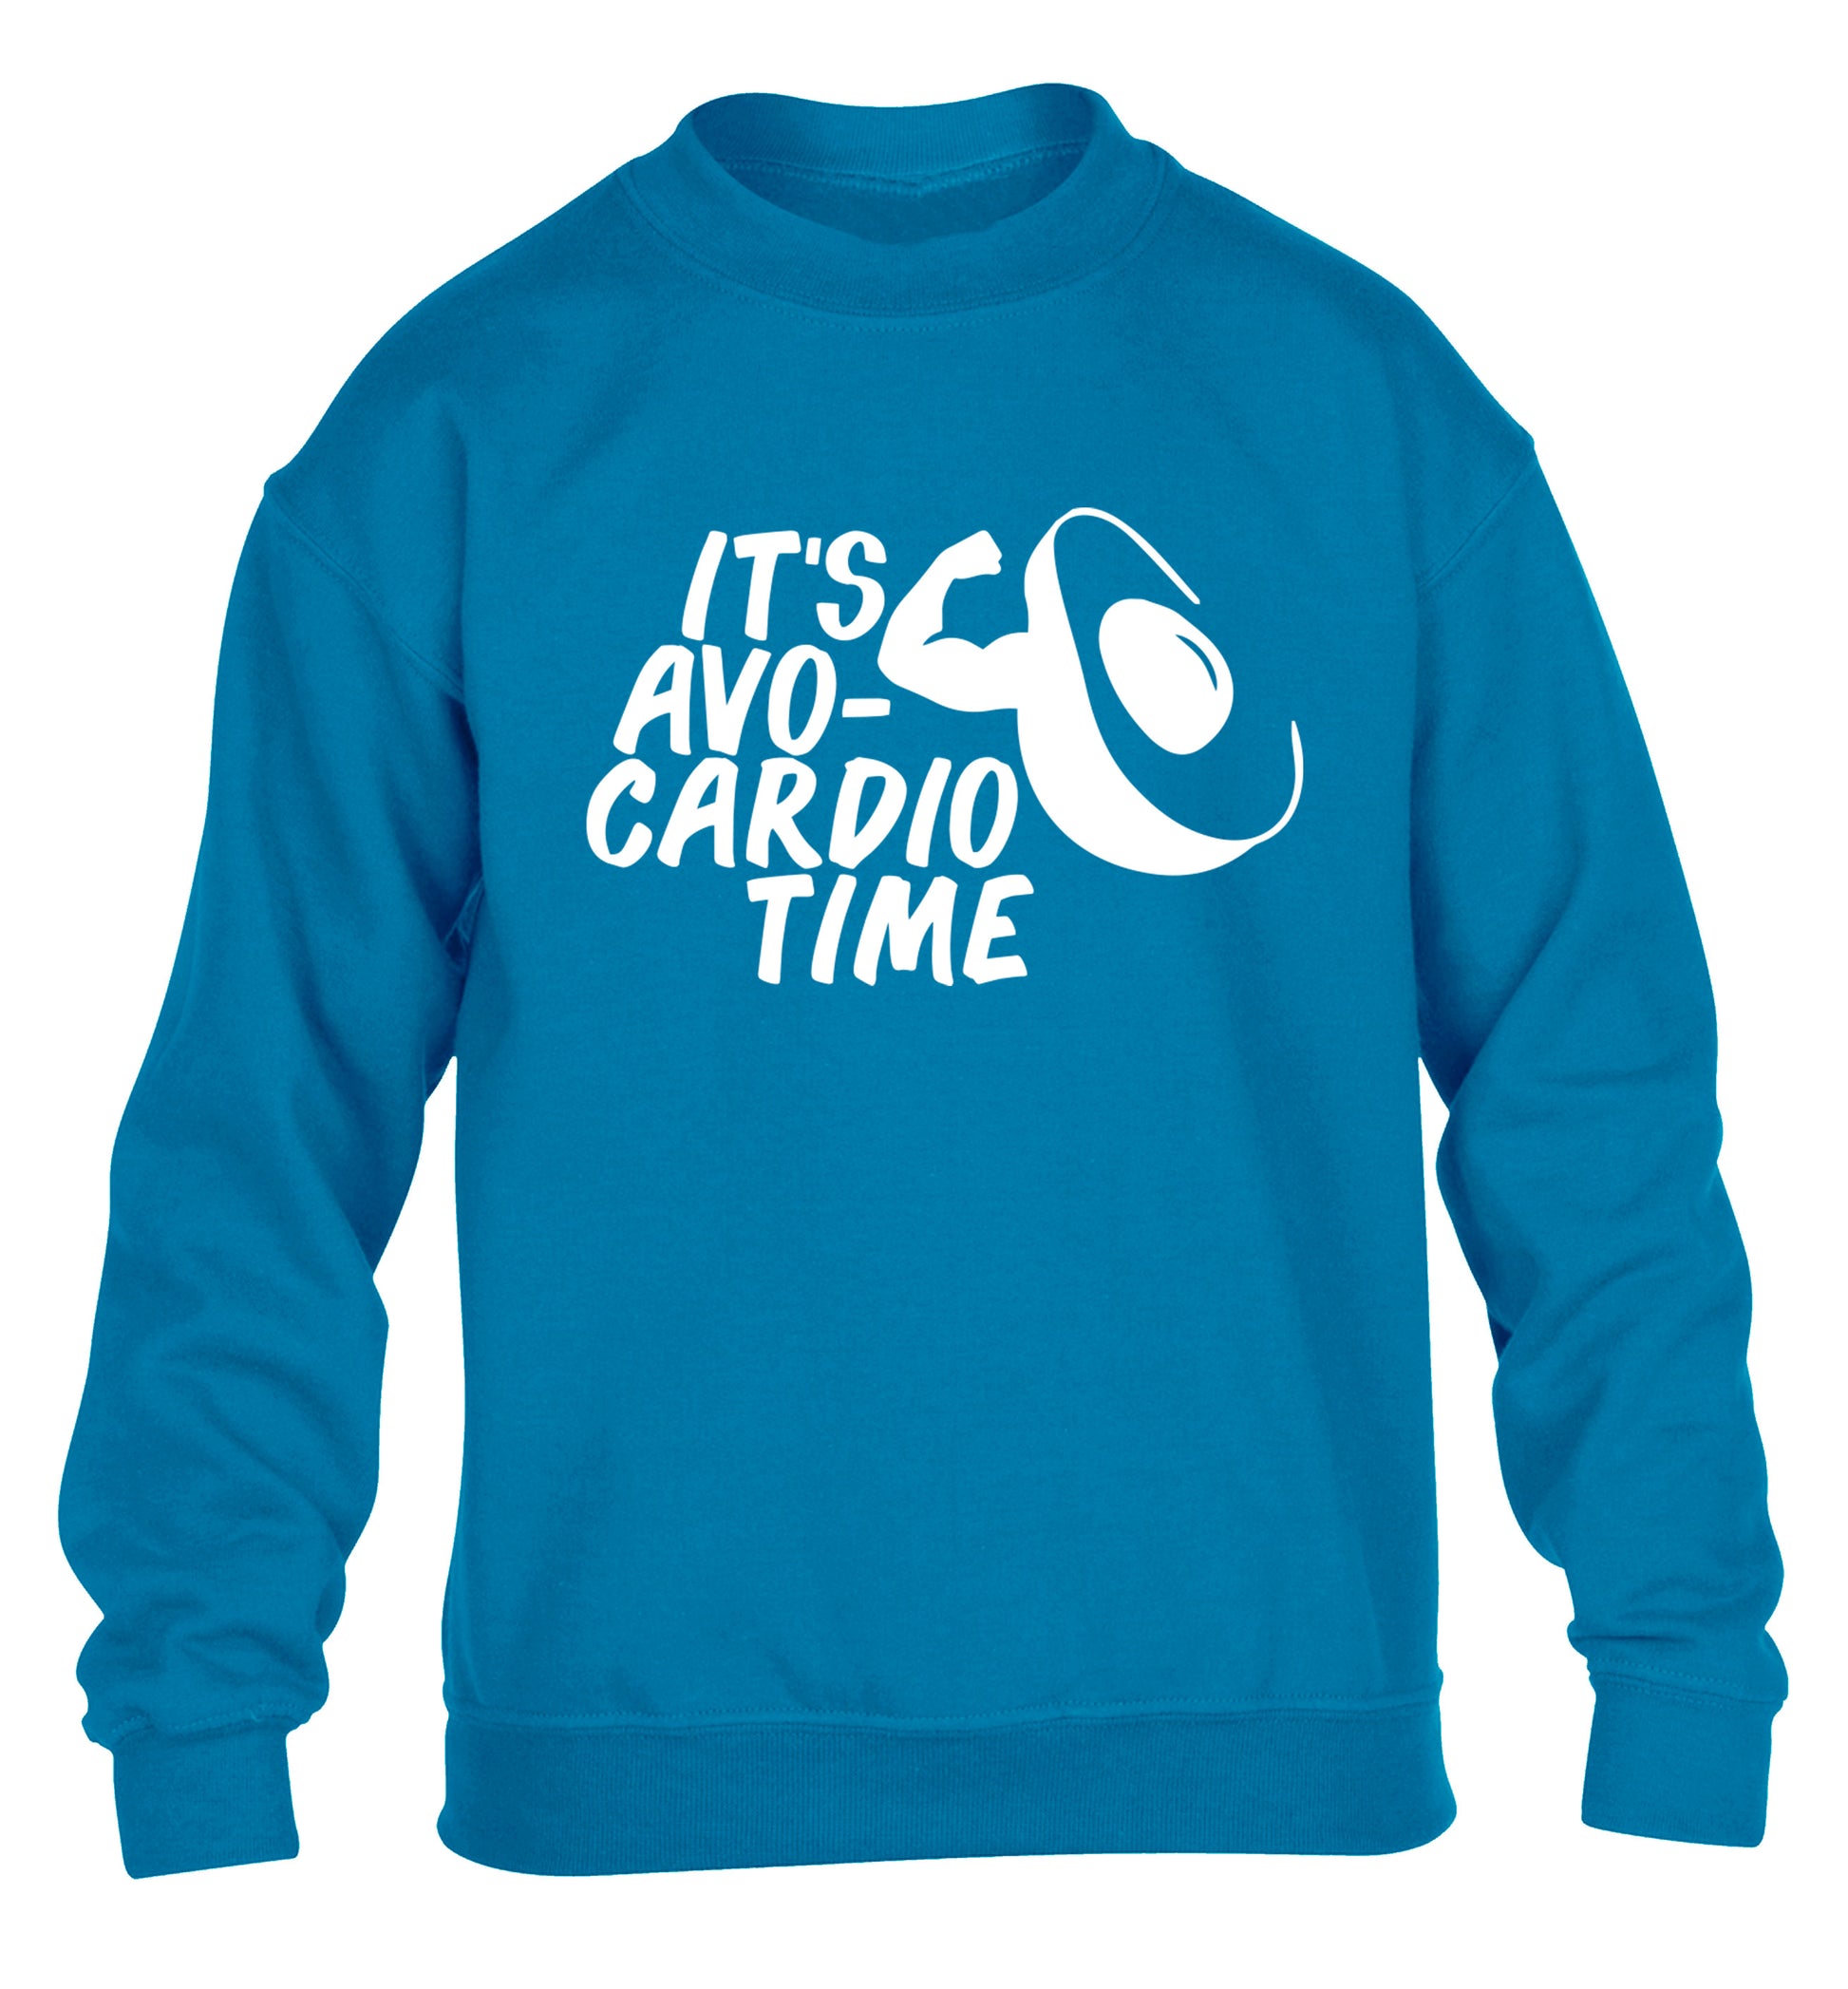 It's avo-cardio time children's blue sweater 12-14 Years